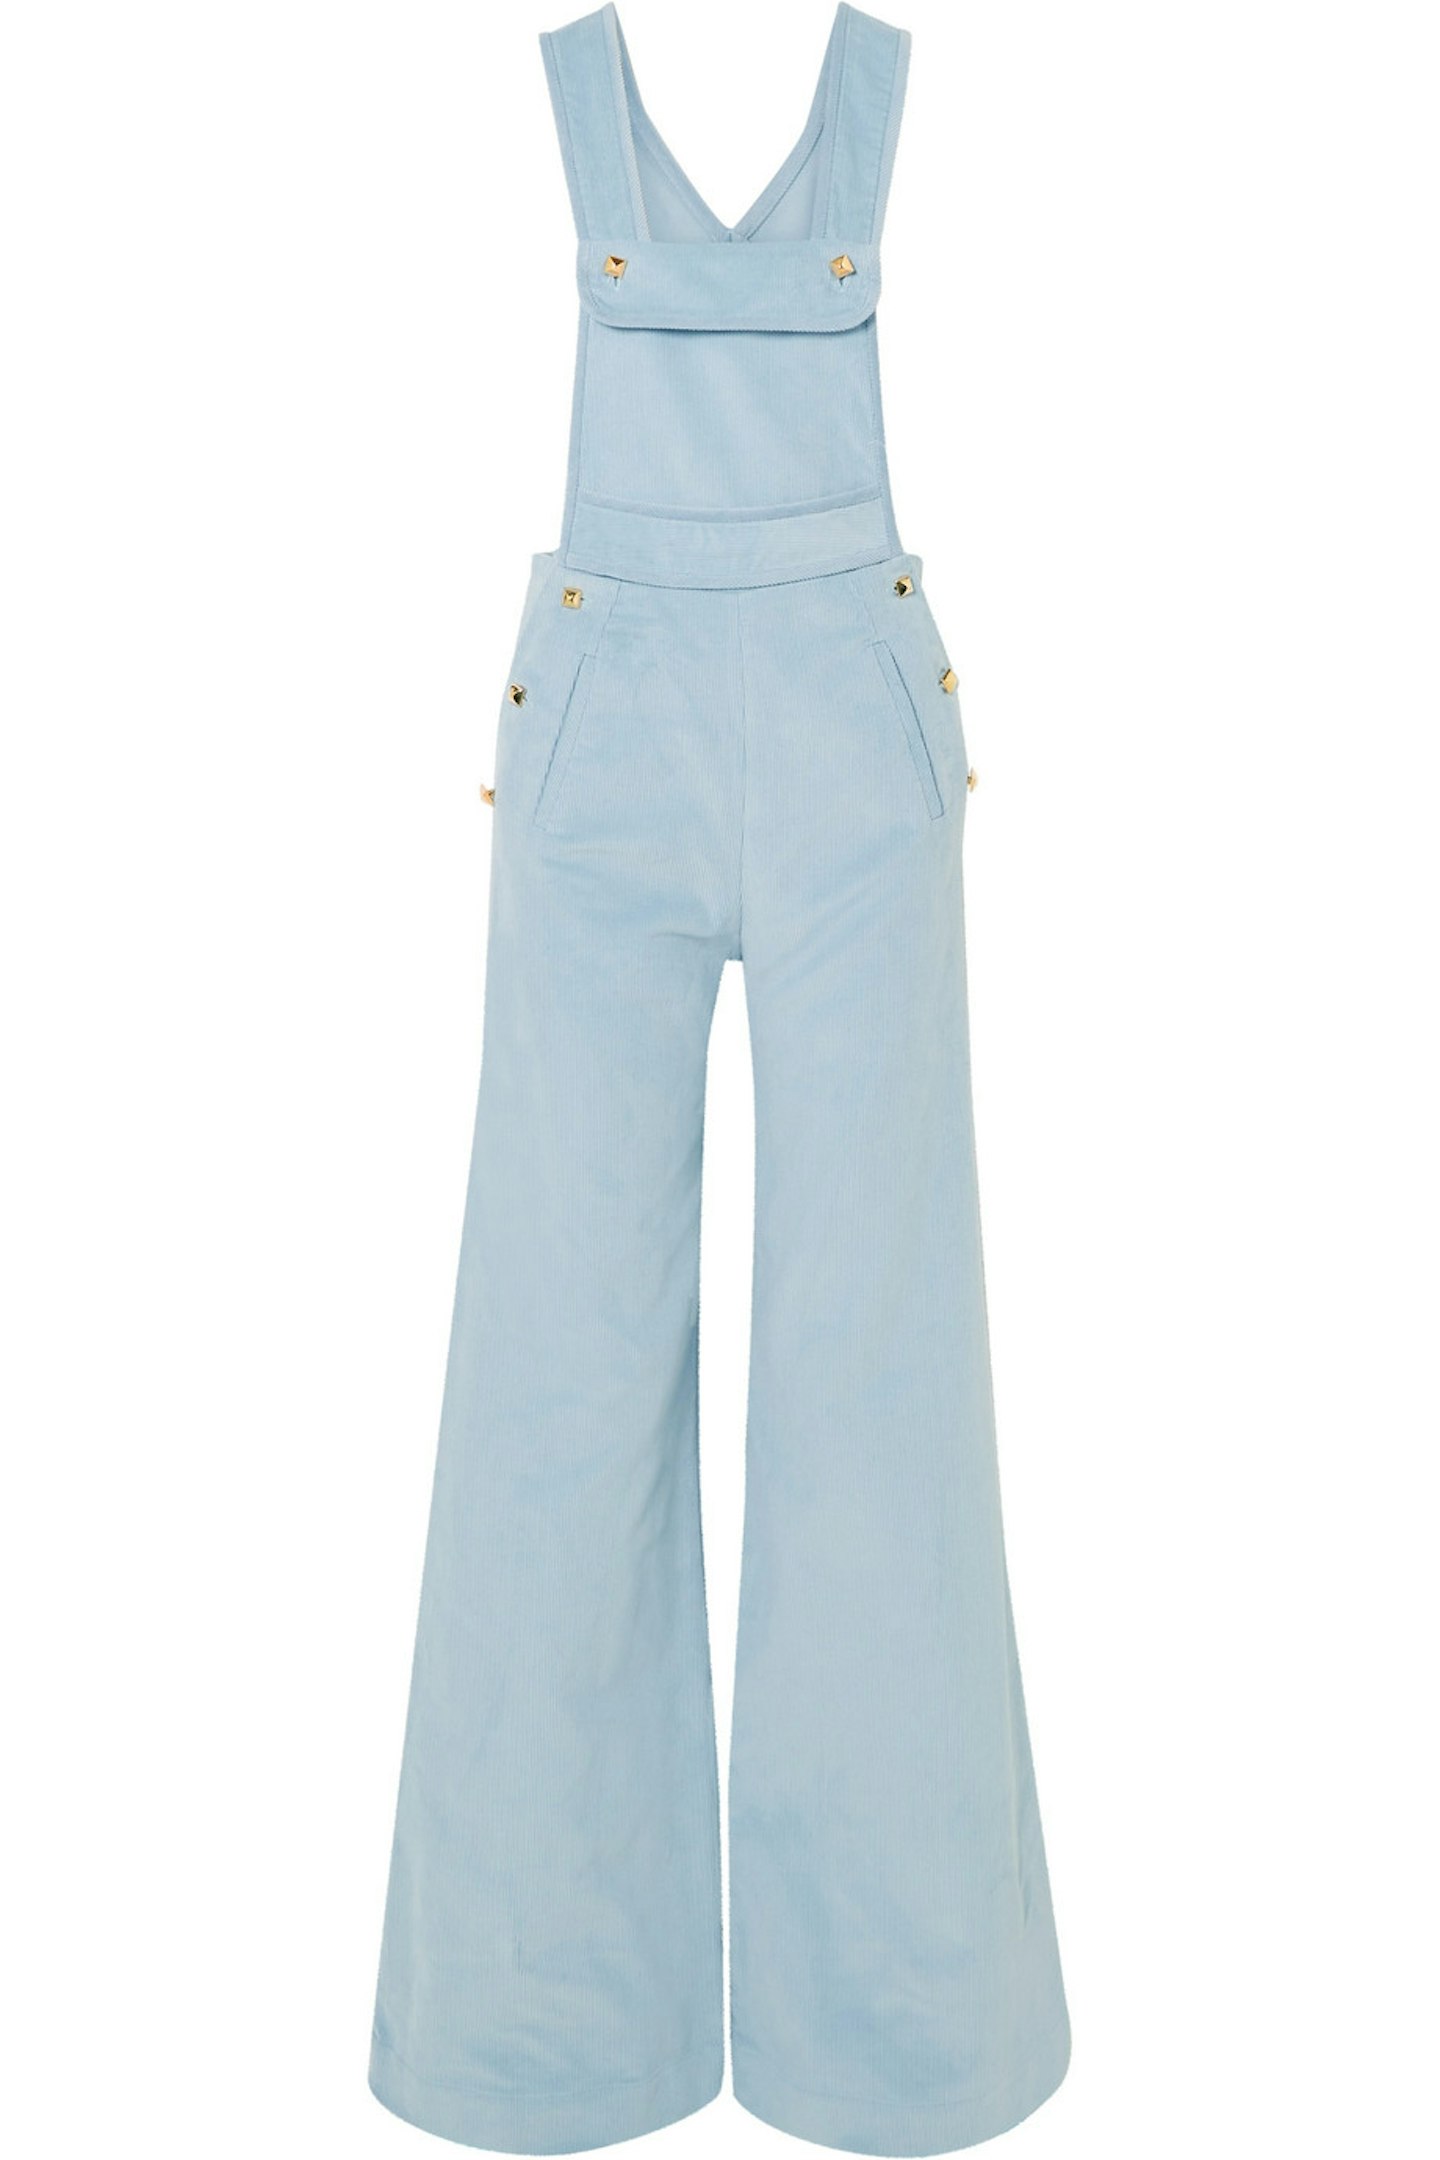 Anne Mason, Bay cotton-corduroy overalls, £700